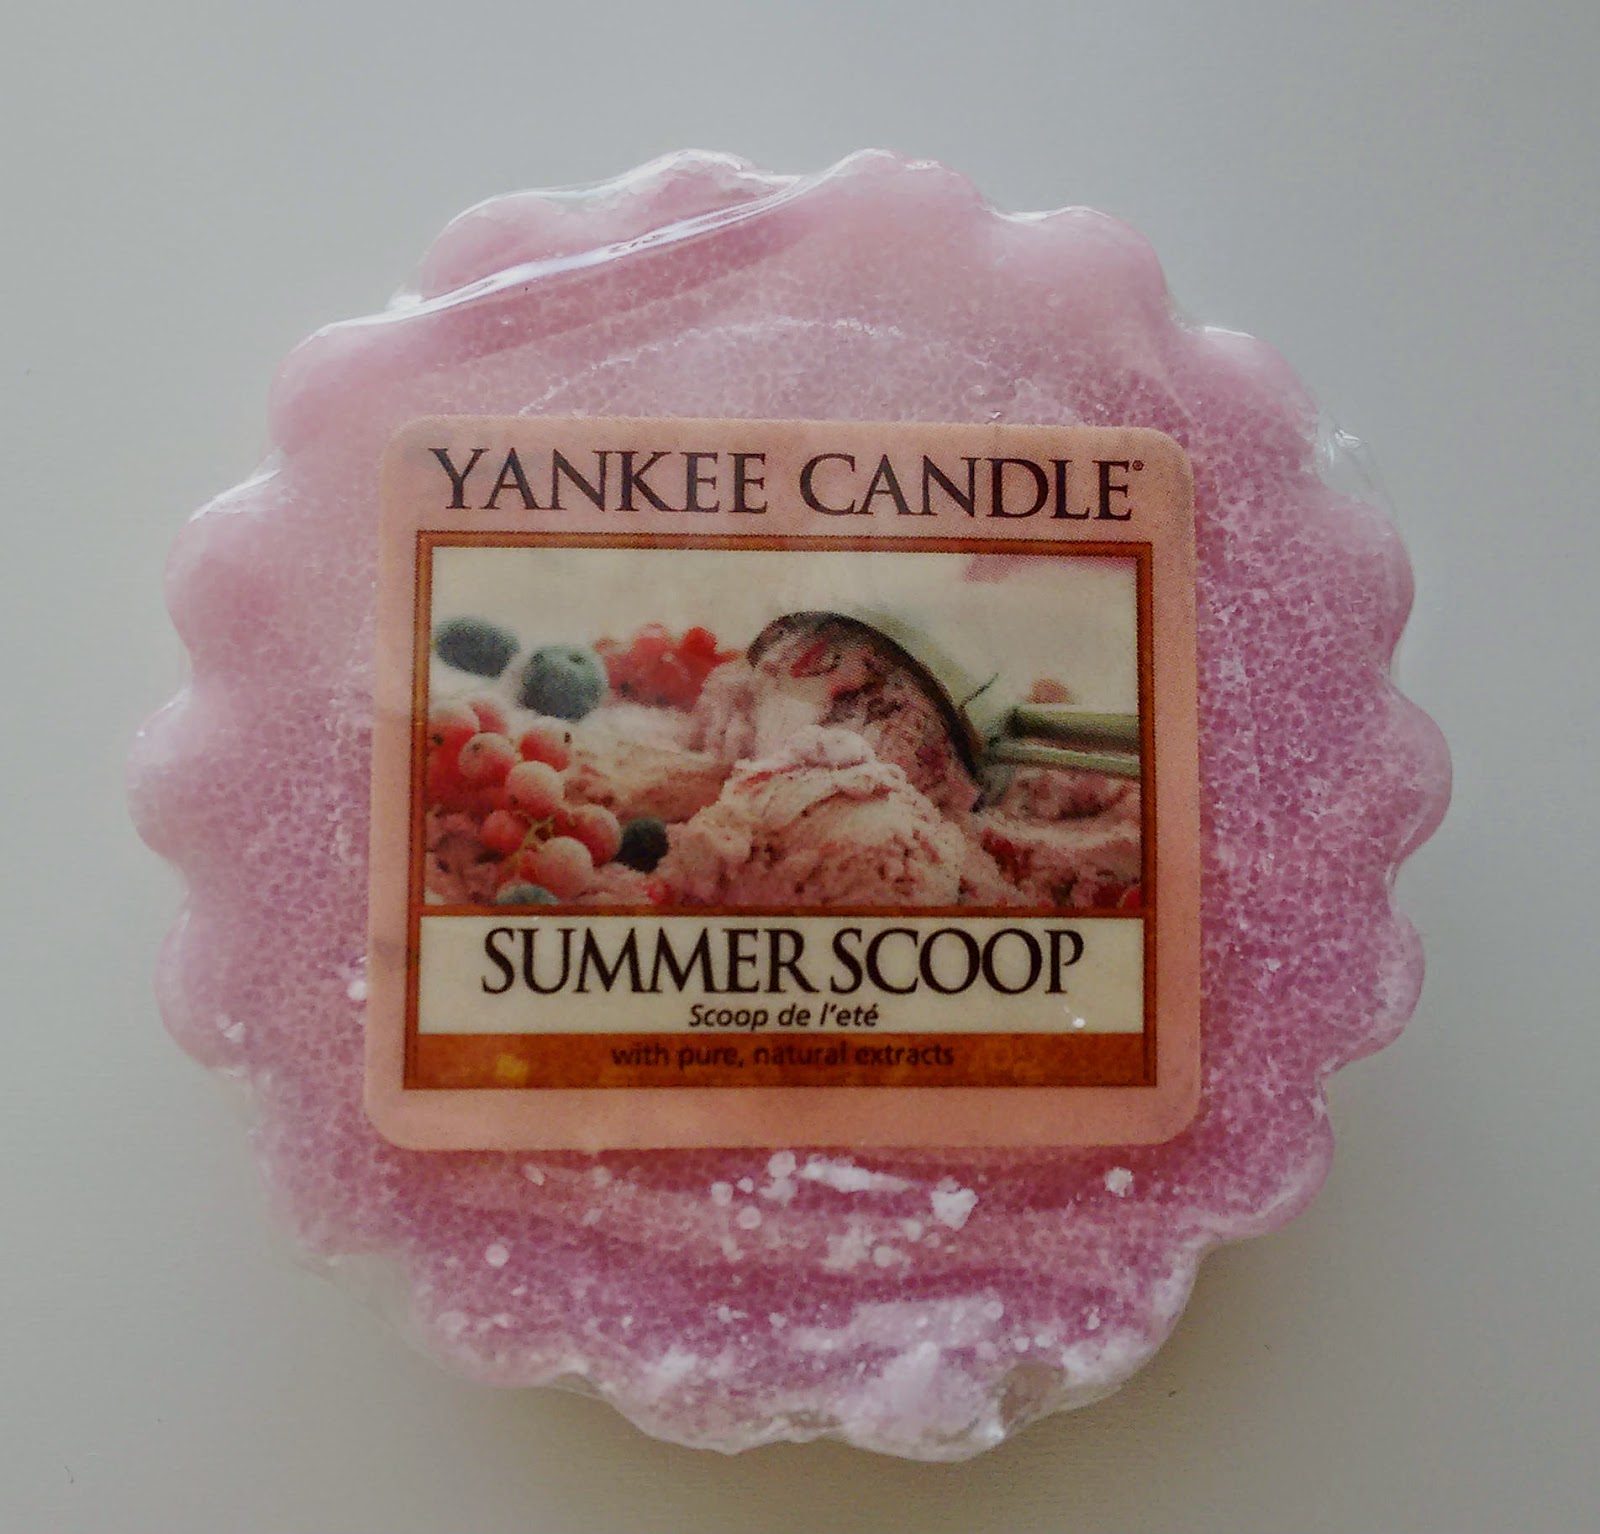 summer scoop tart yankee candle